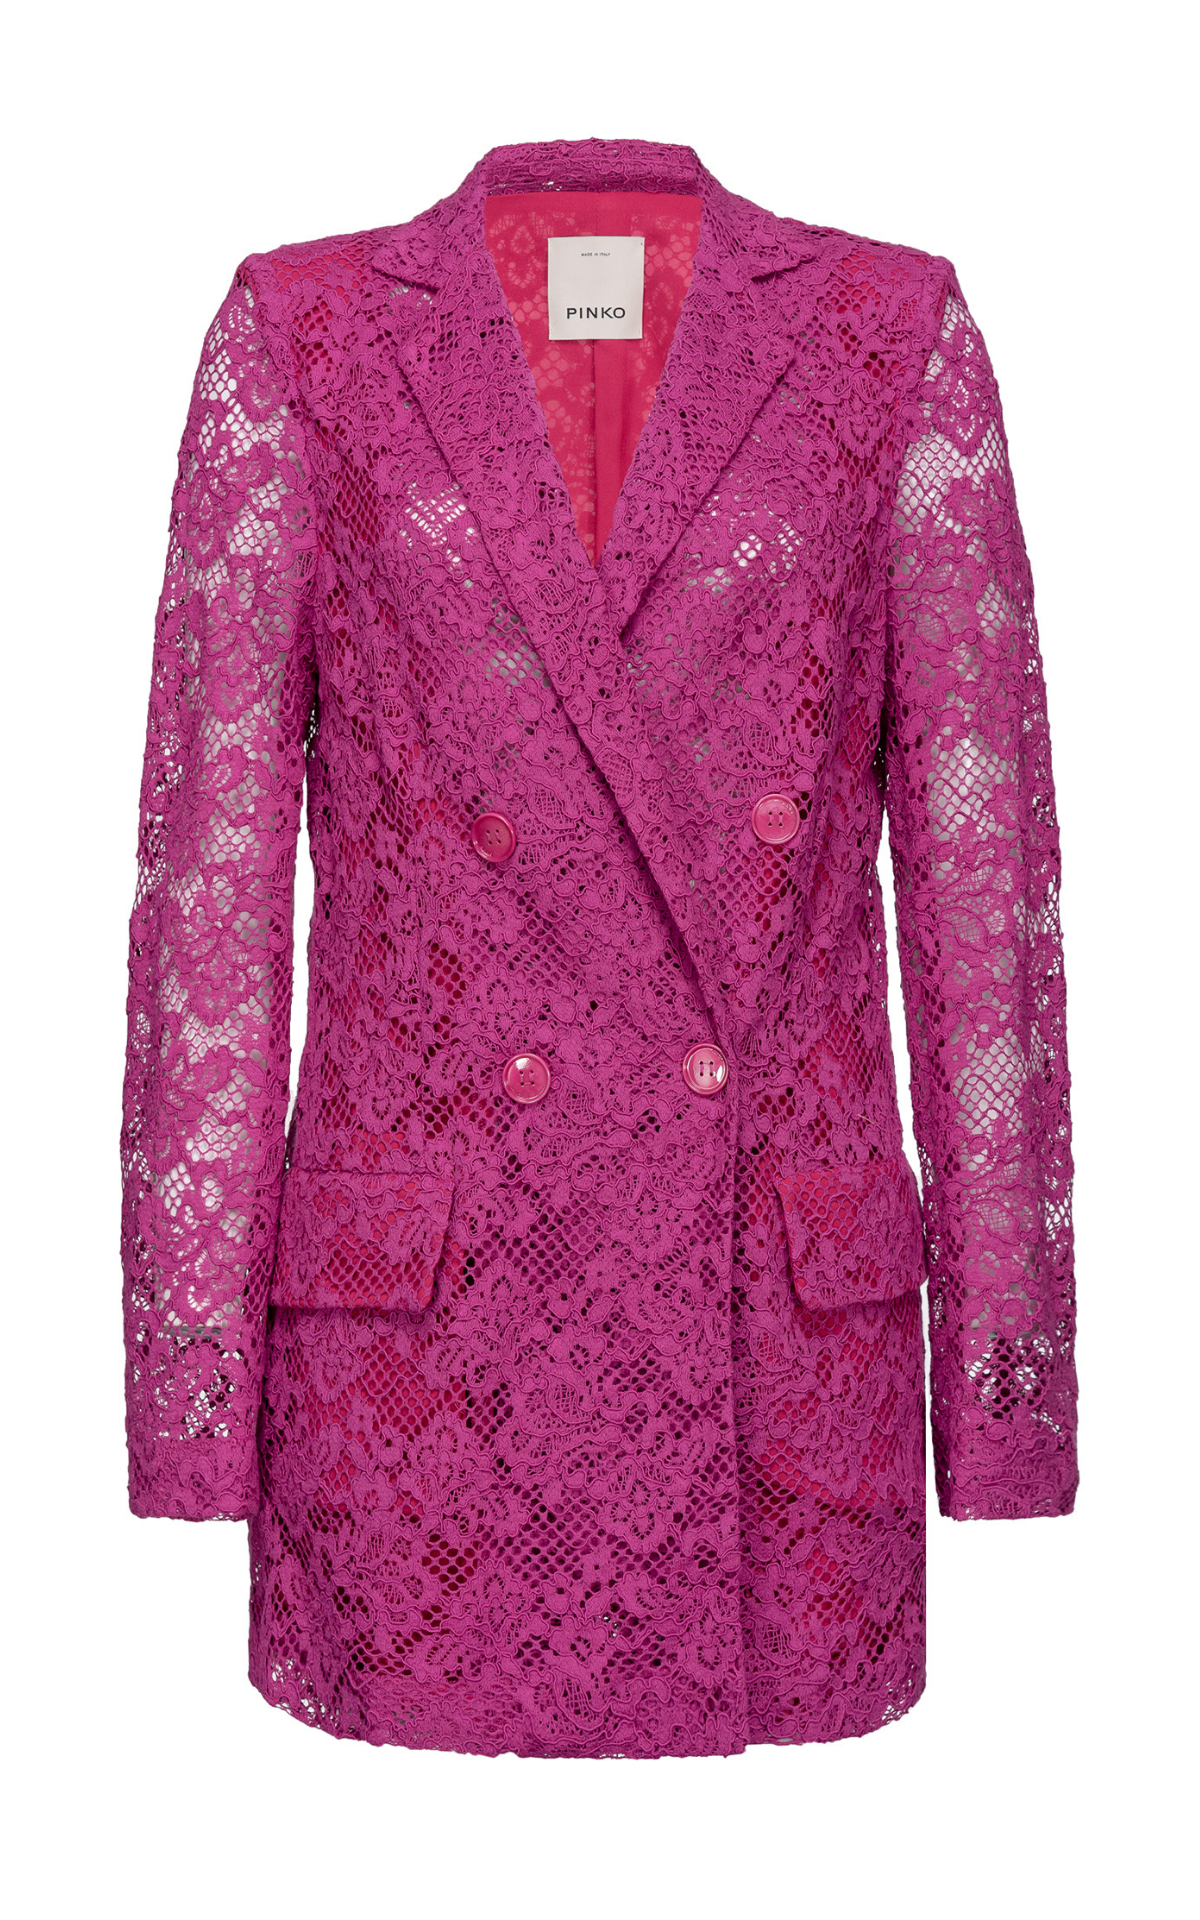 Floral fuchsia lace jacket